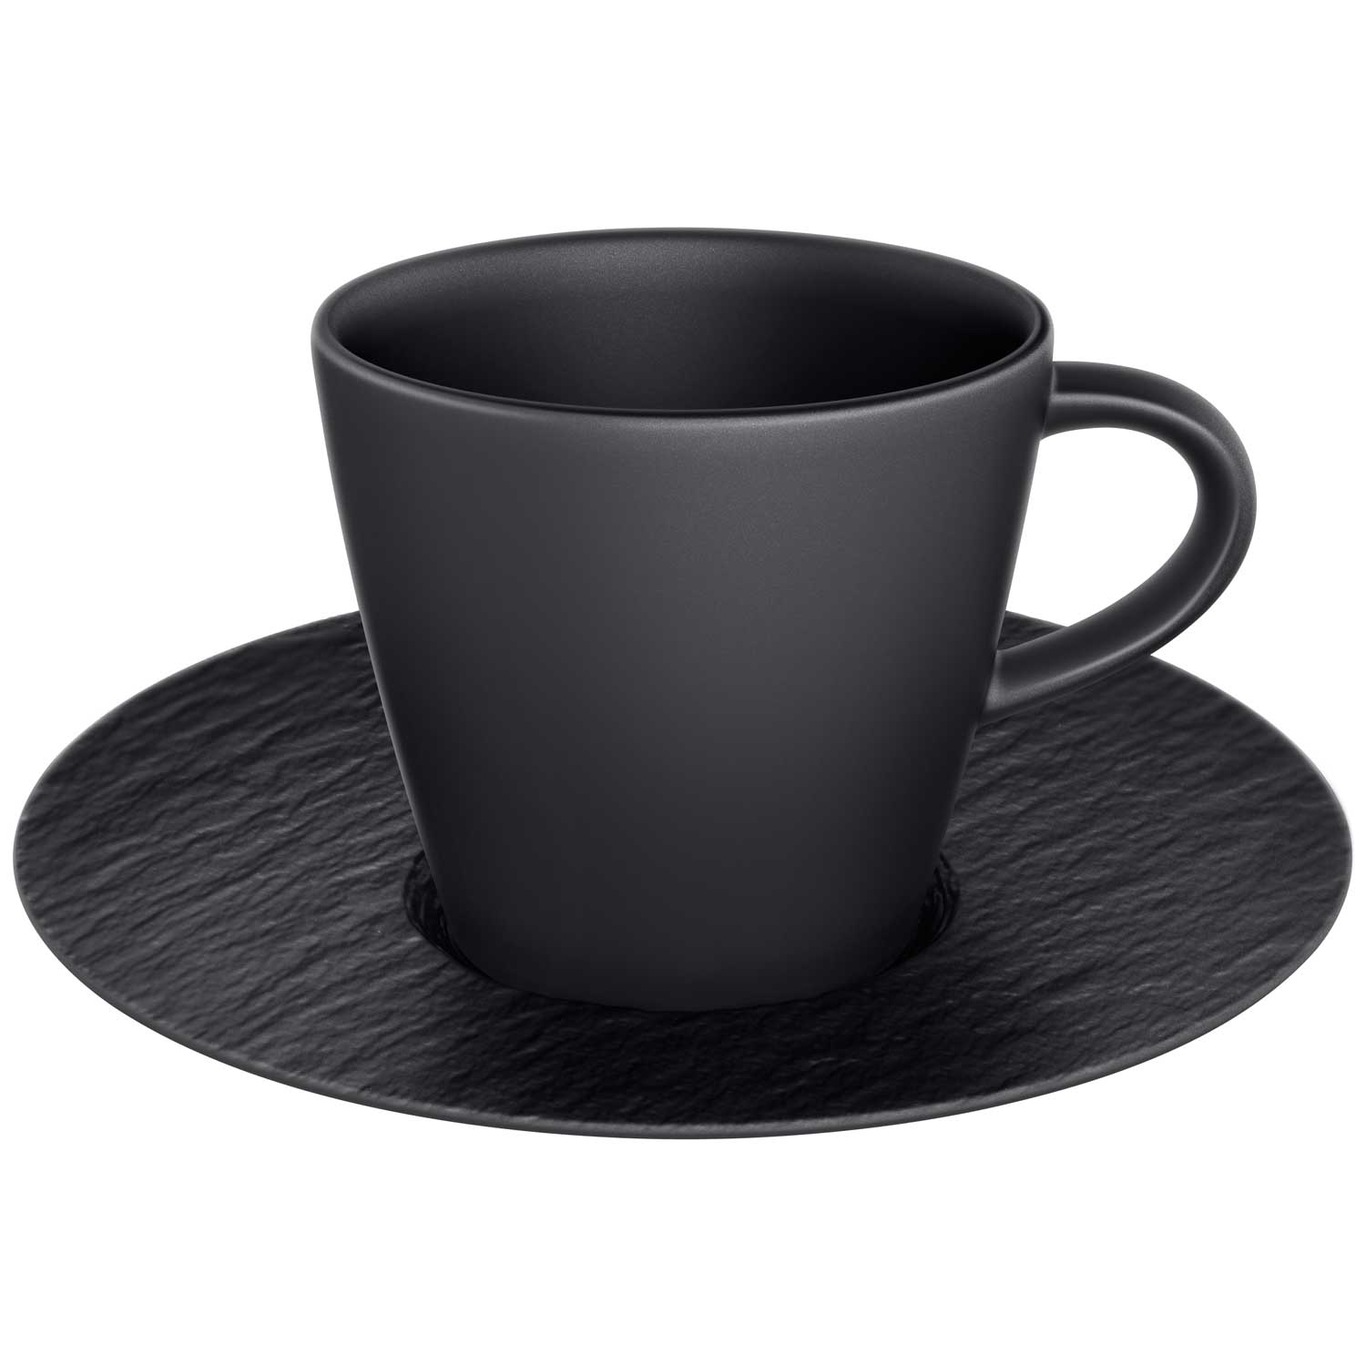 Manufacture Rock Espresso Cup, Black 10 cl